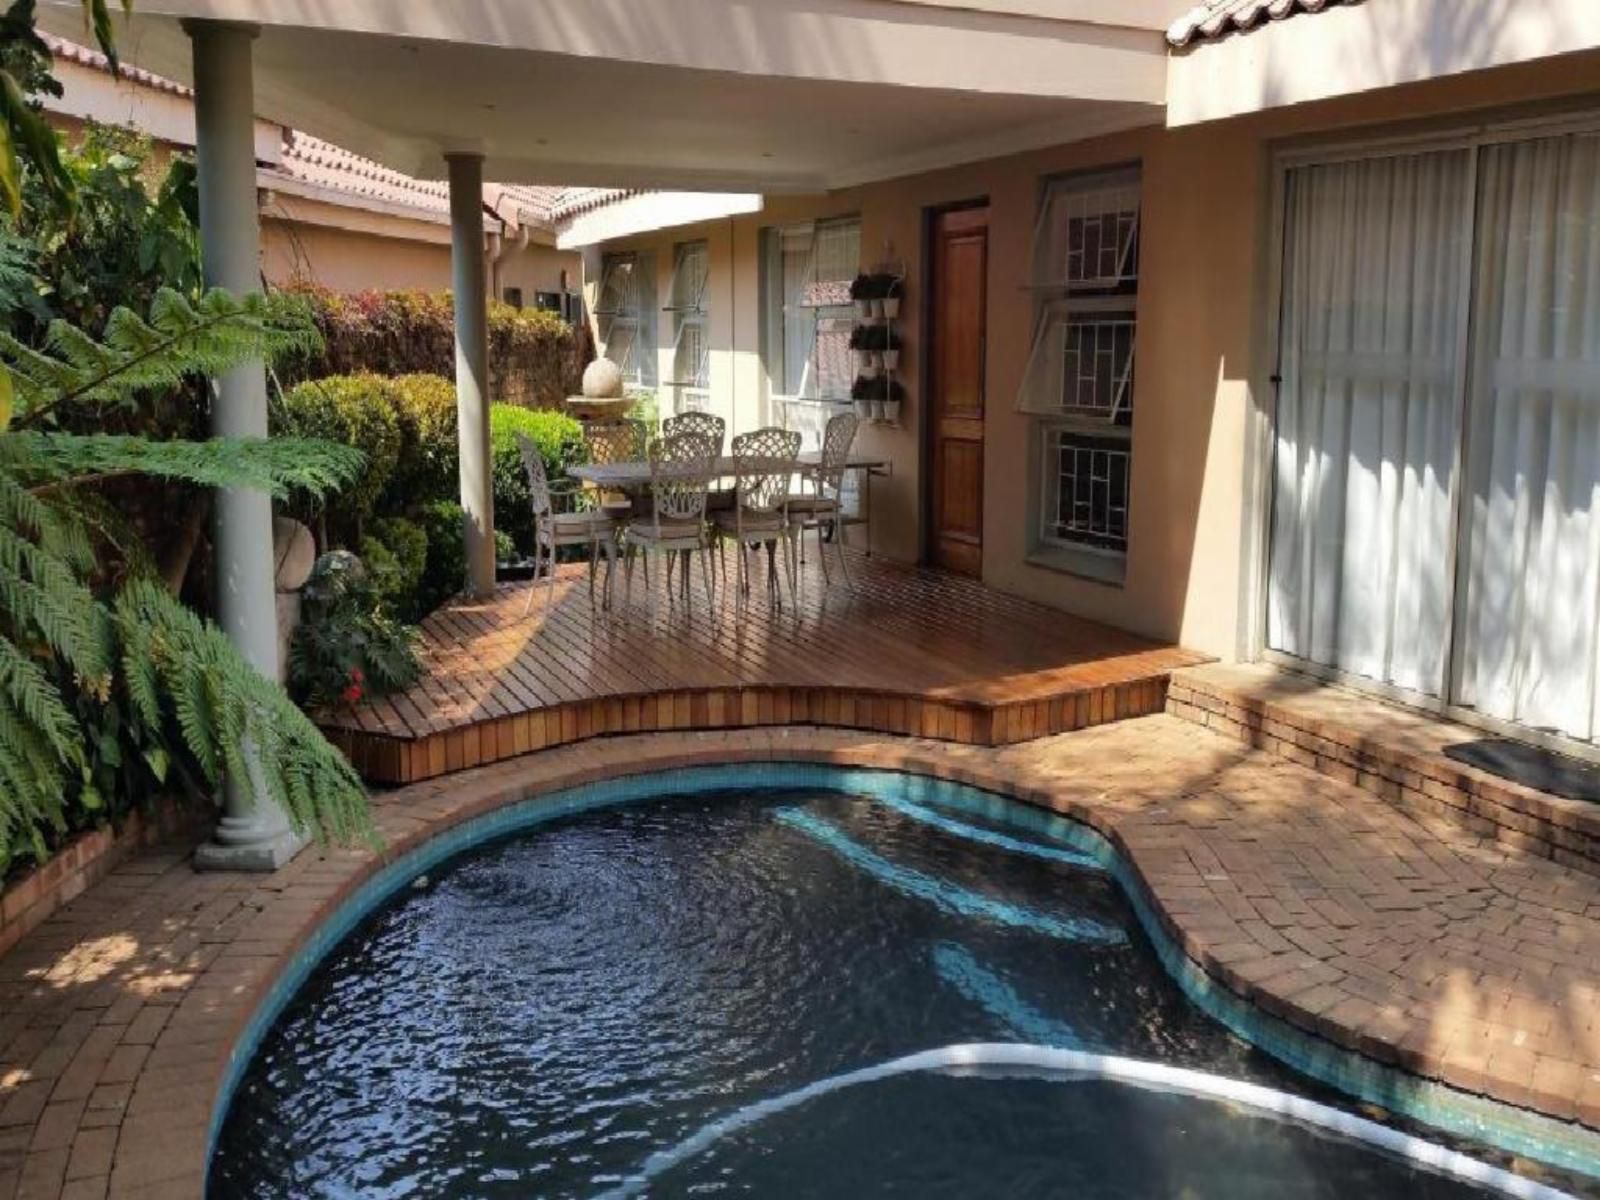 Royal Ridge Guest House Waterkloof Ridge Pretoria Tshwane Gauteng South Africa House, Building, Architecture, Garden, Nature, Plant, Swimming Pool